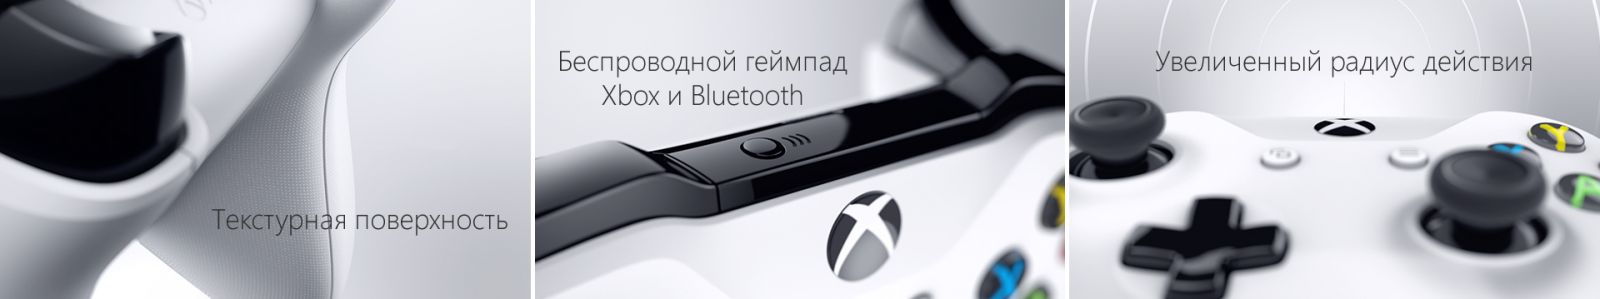 Xbox One S 500GB + FIFA 17 image7